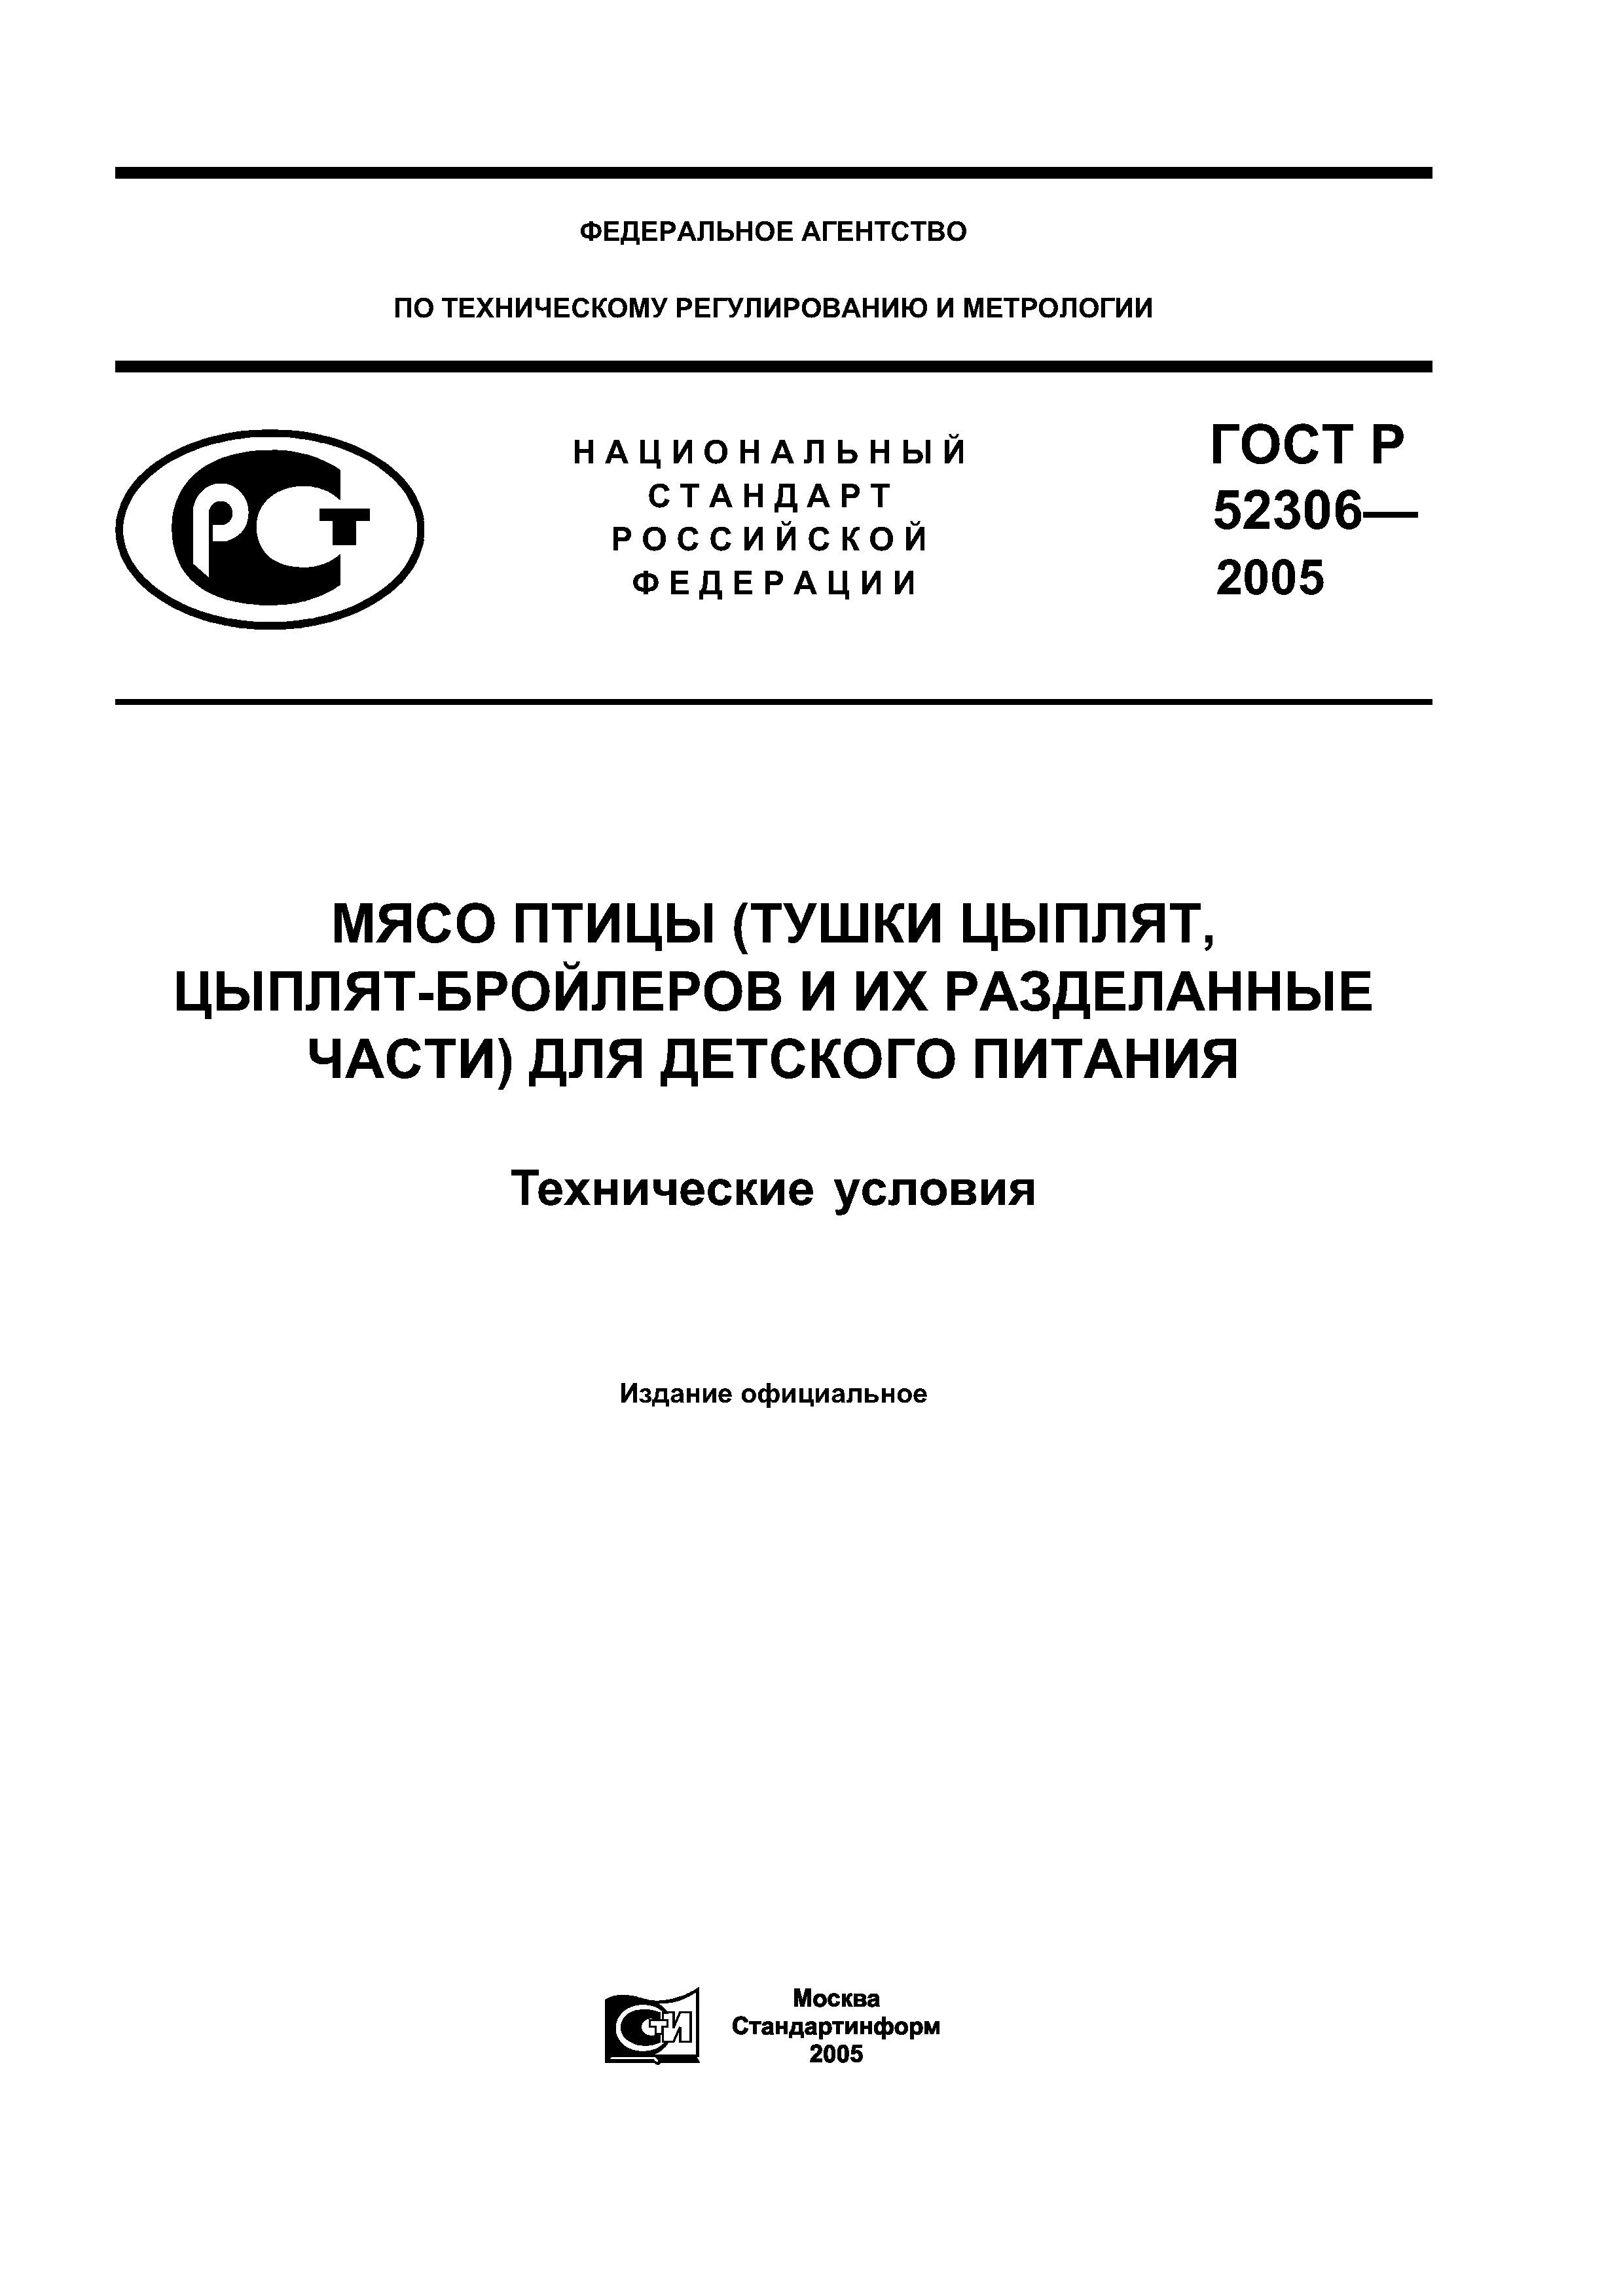 ГОСТ Р 52306-2005